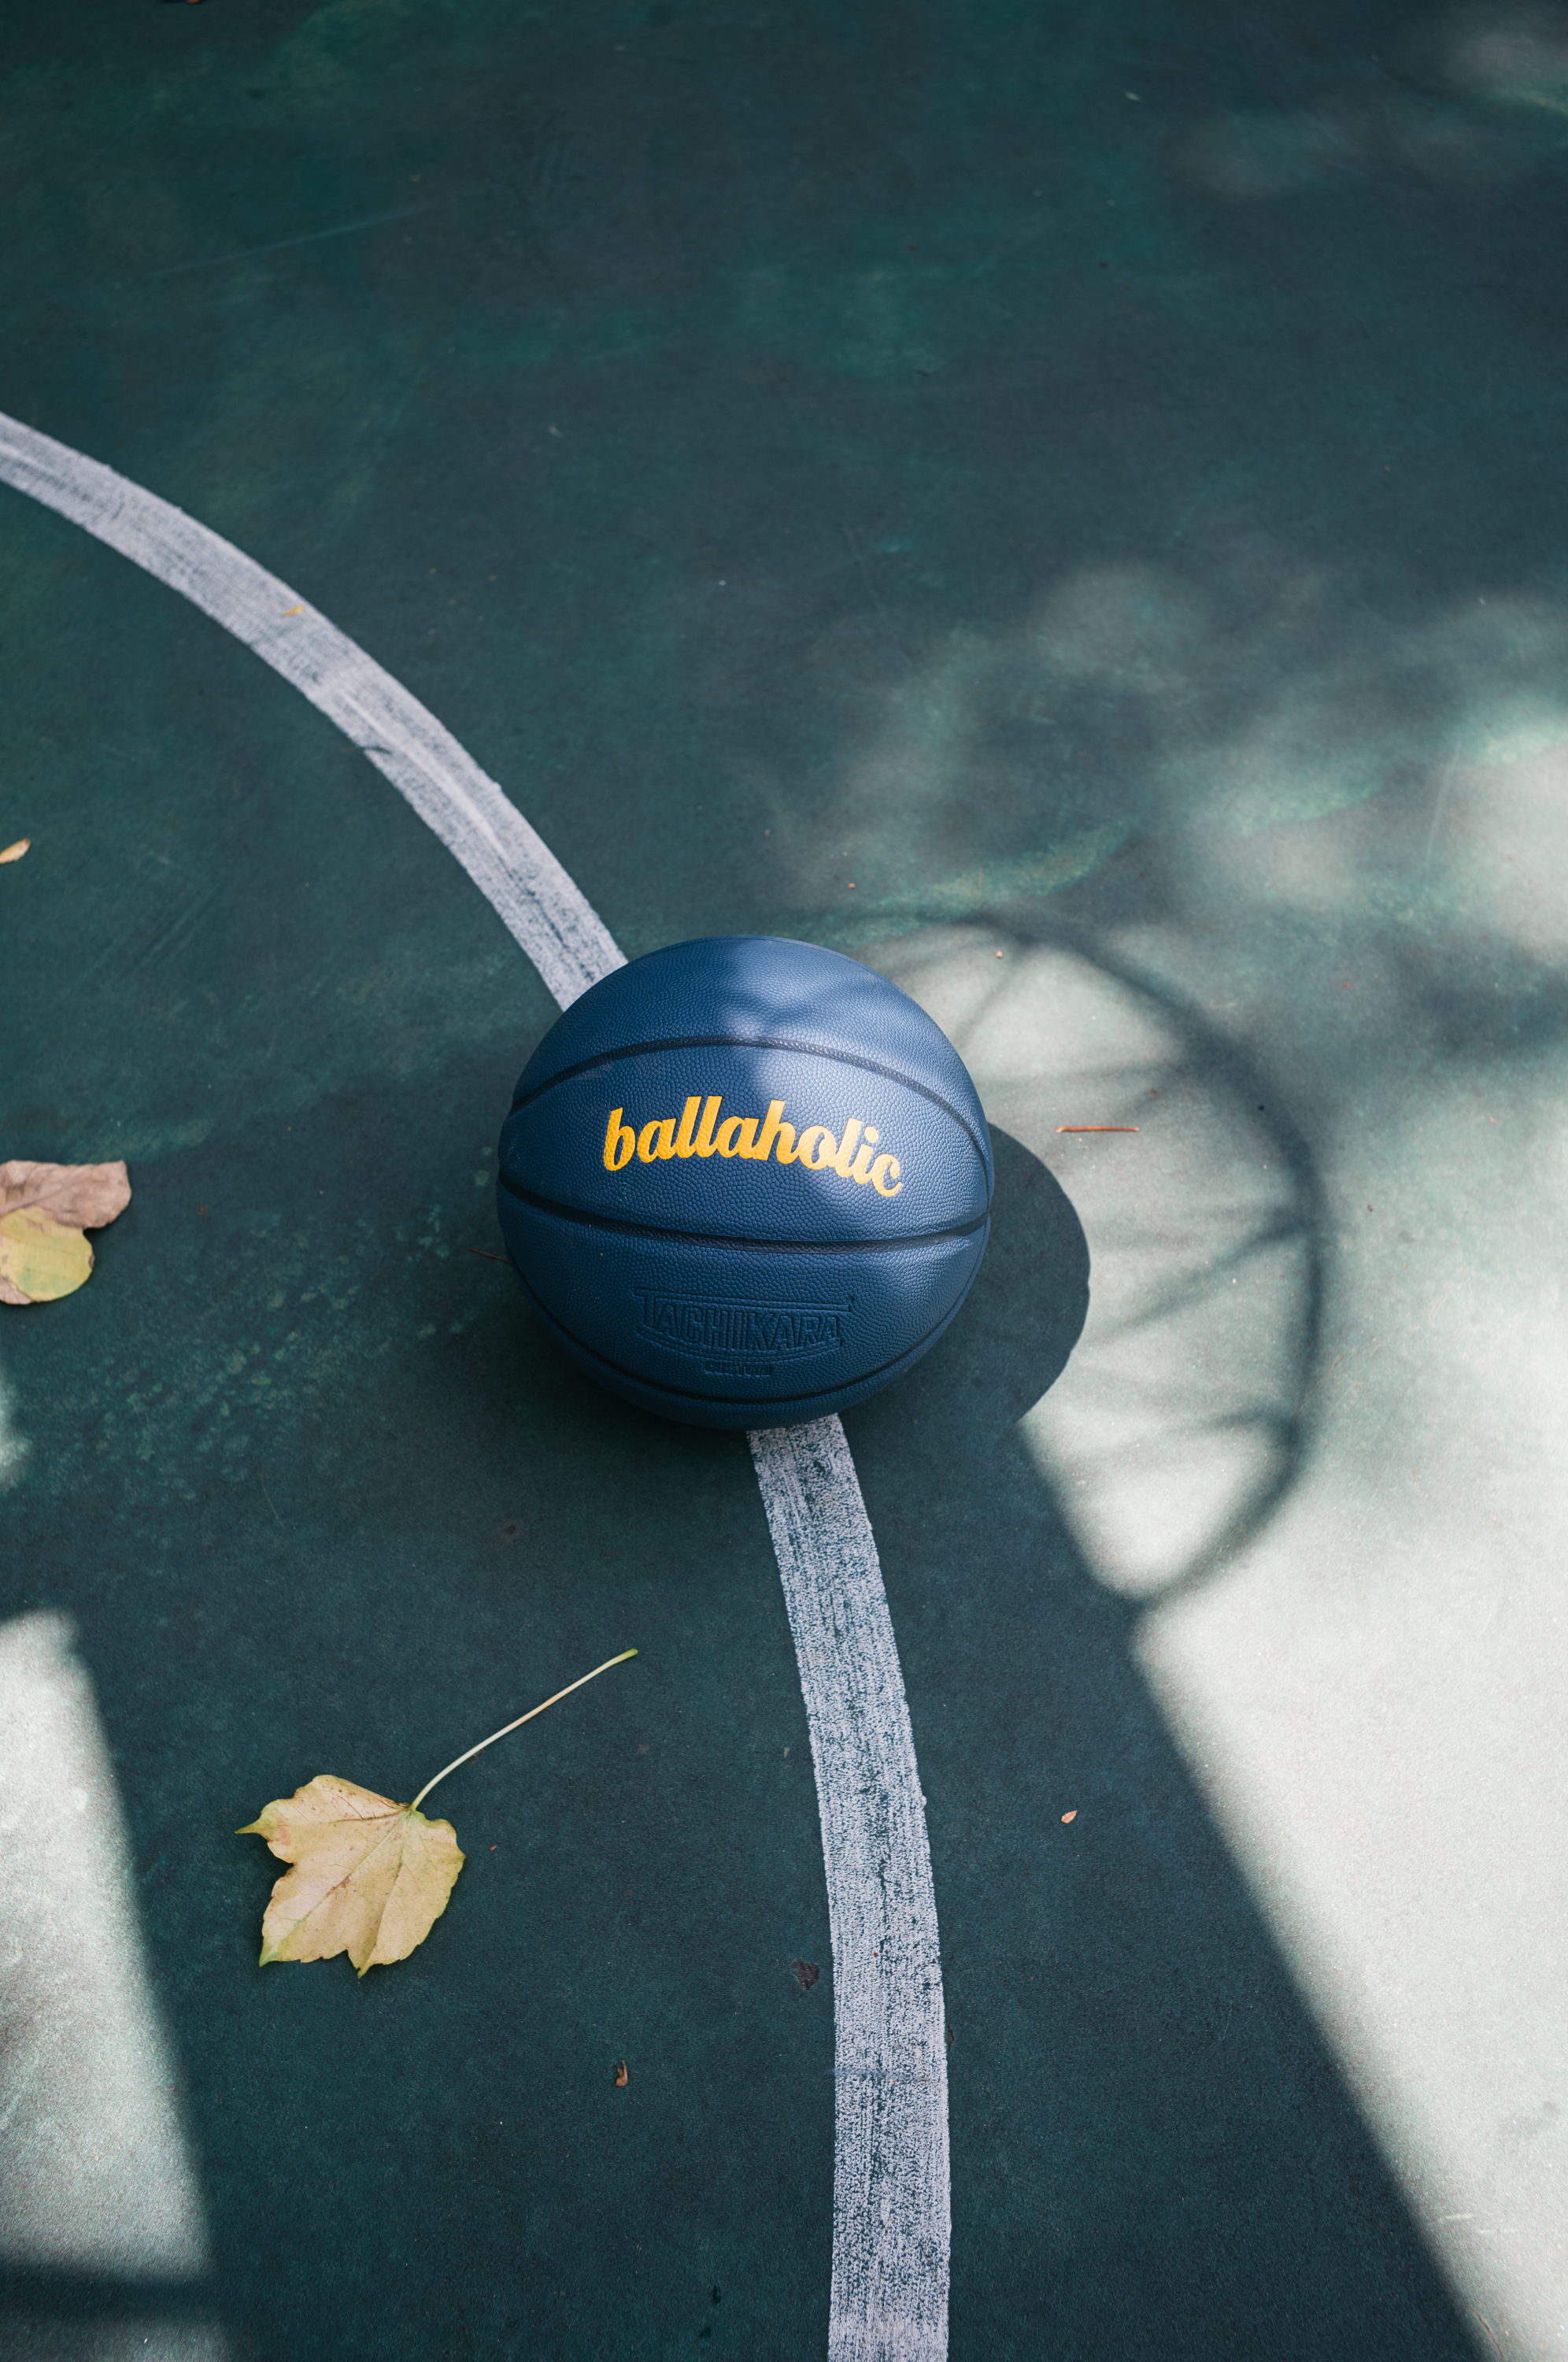 ballaholicオンラインショップ / Playground Basketball / ballaholic